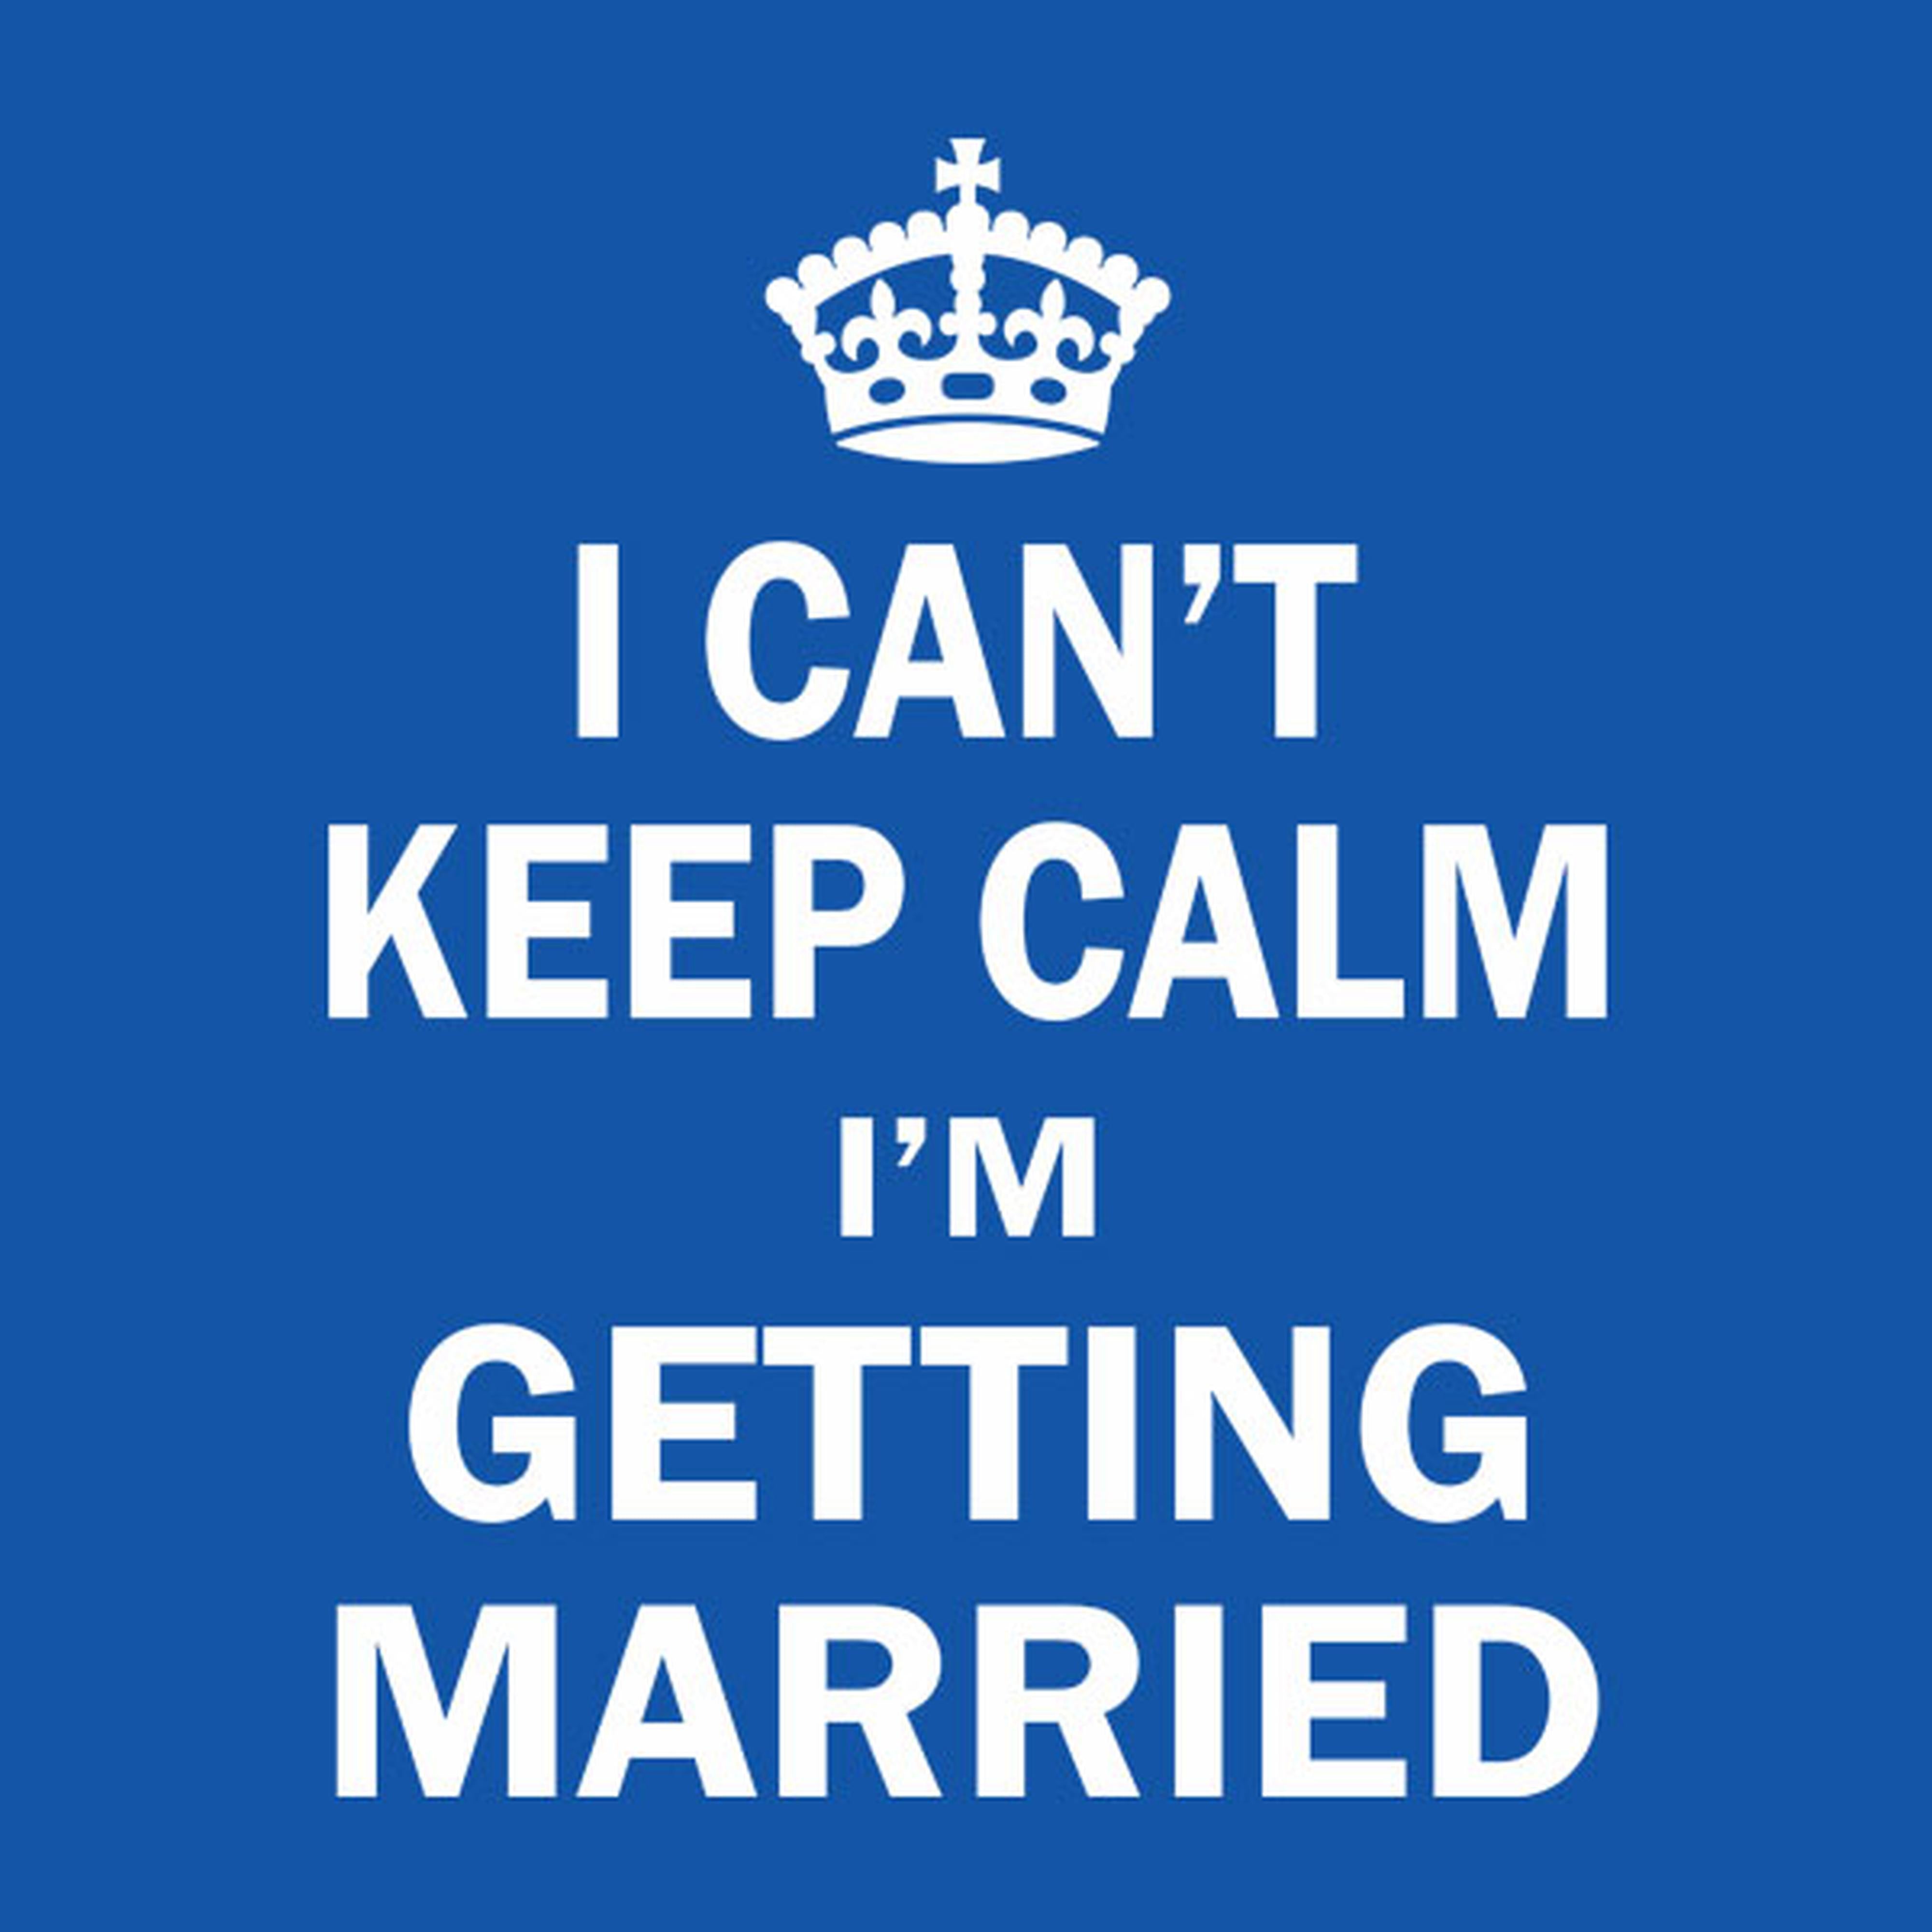 I can't keep calm - I'm getting married